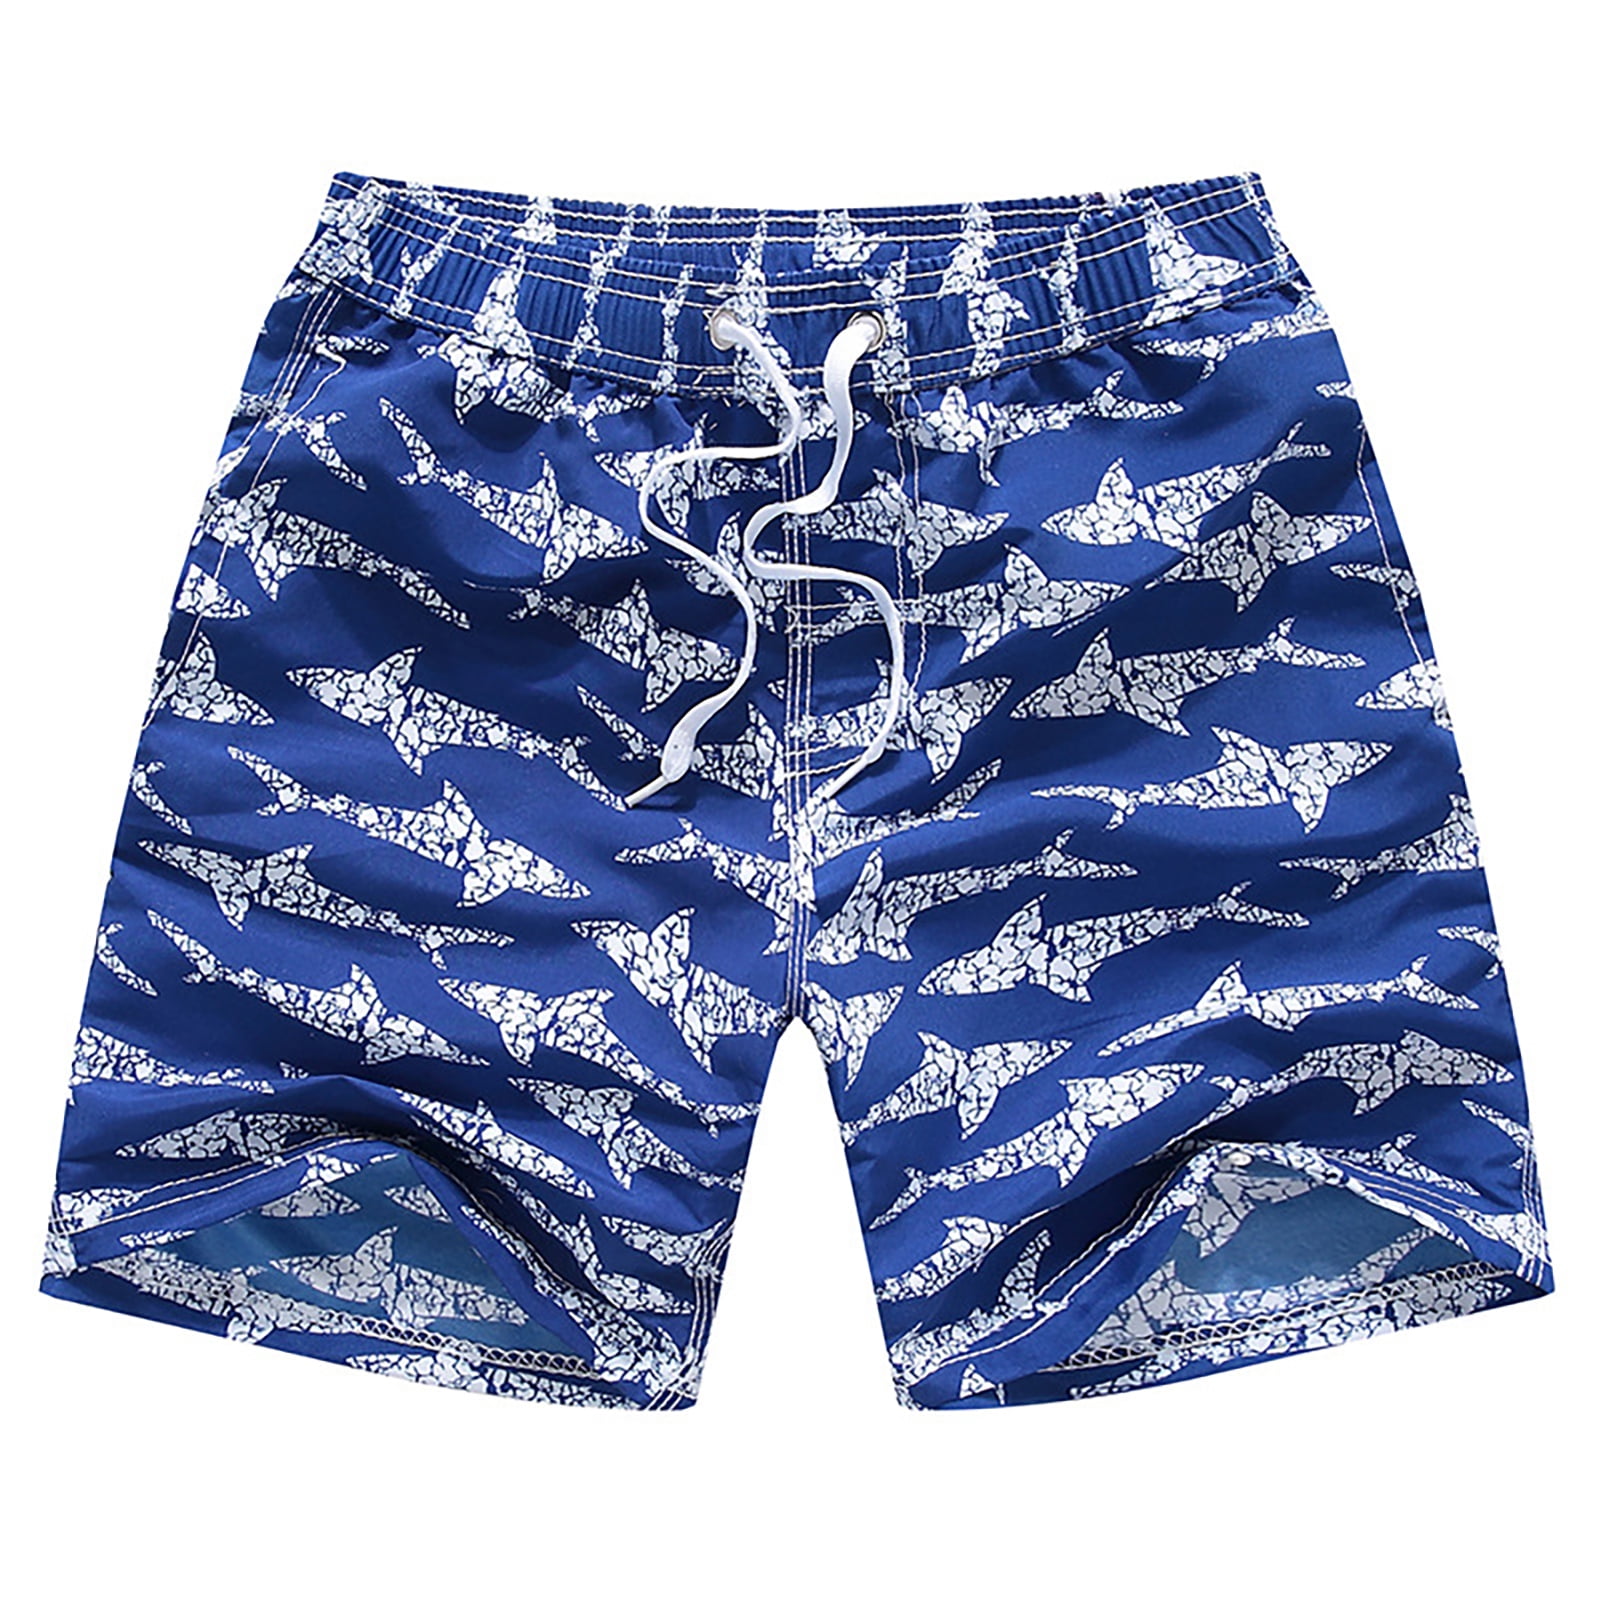 Flmtop Beach Shorts Printing Quick Dry Swimsuit Boys Bathing Suit Beach ...